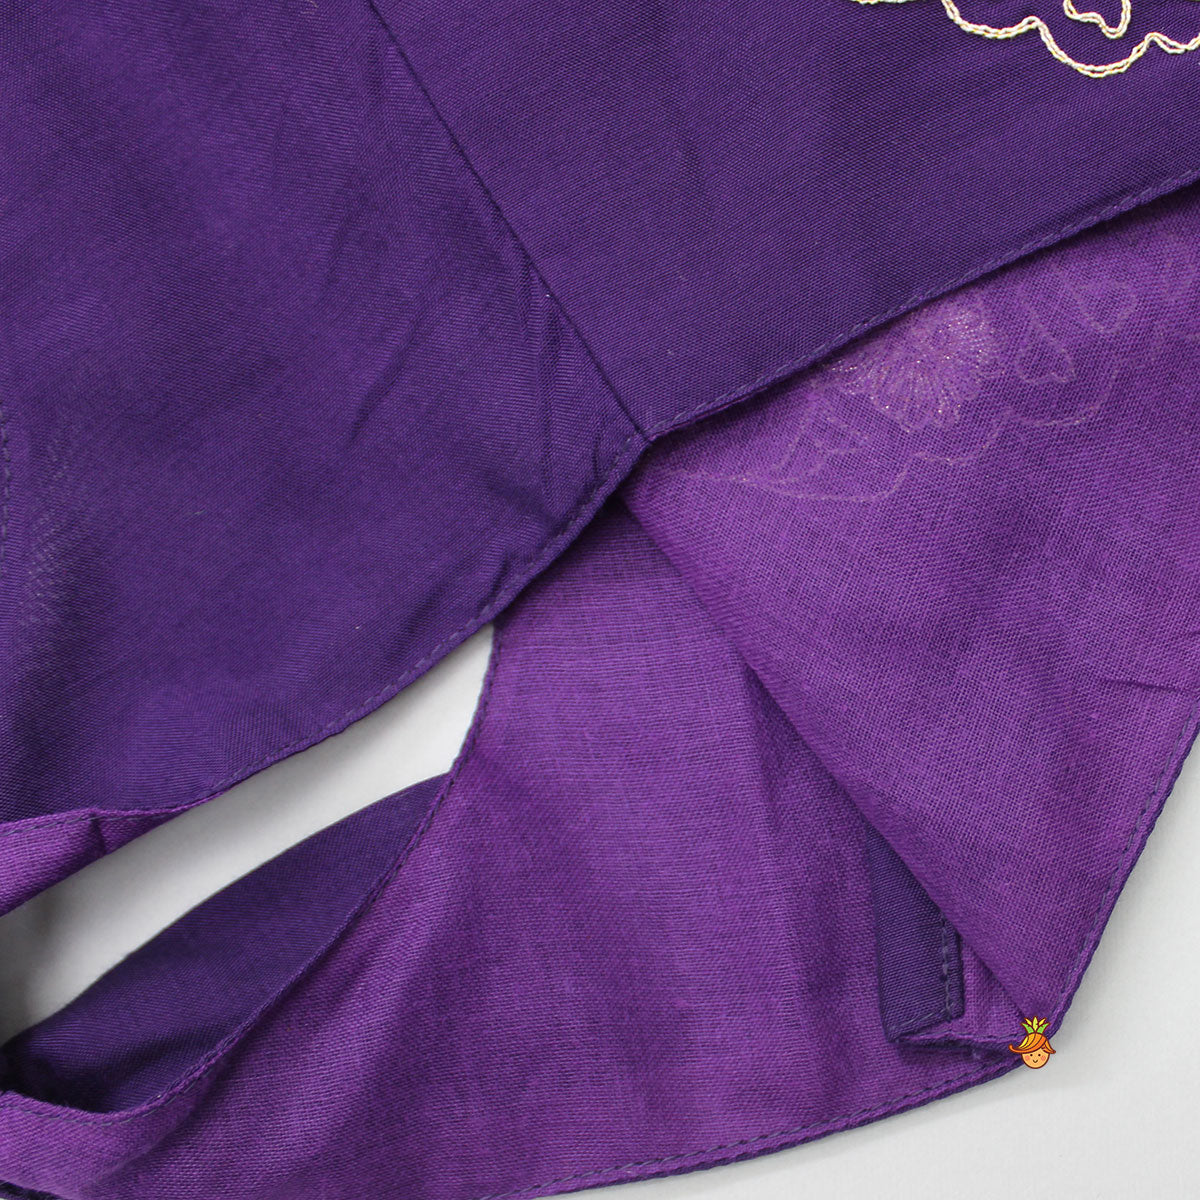 Dual Back Knot Detail Purple Top And Tassels Enhanced Lehenga